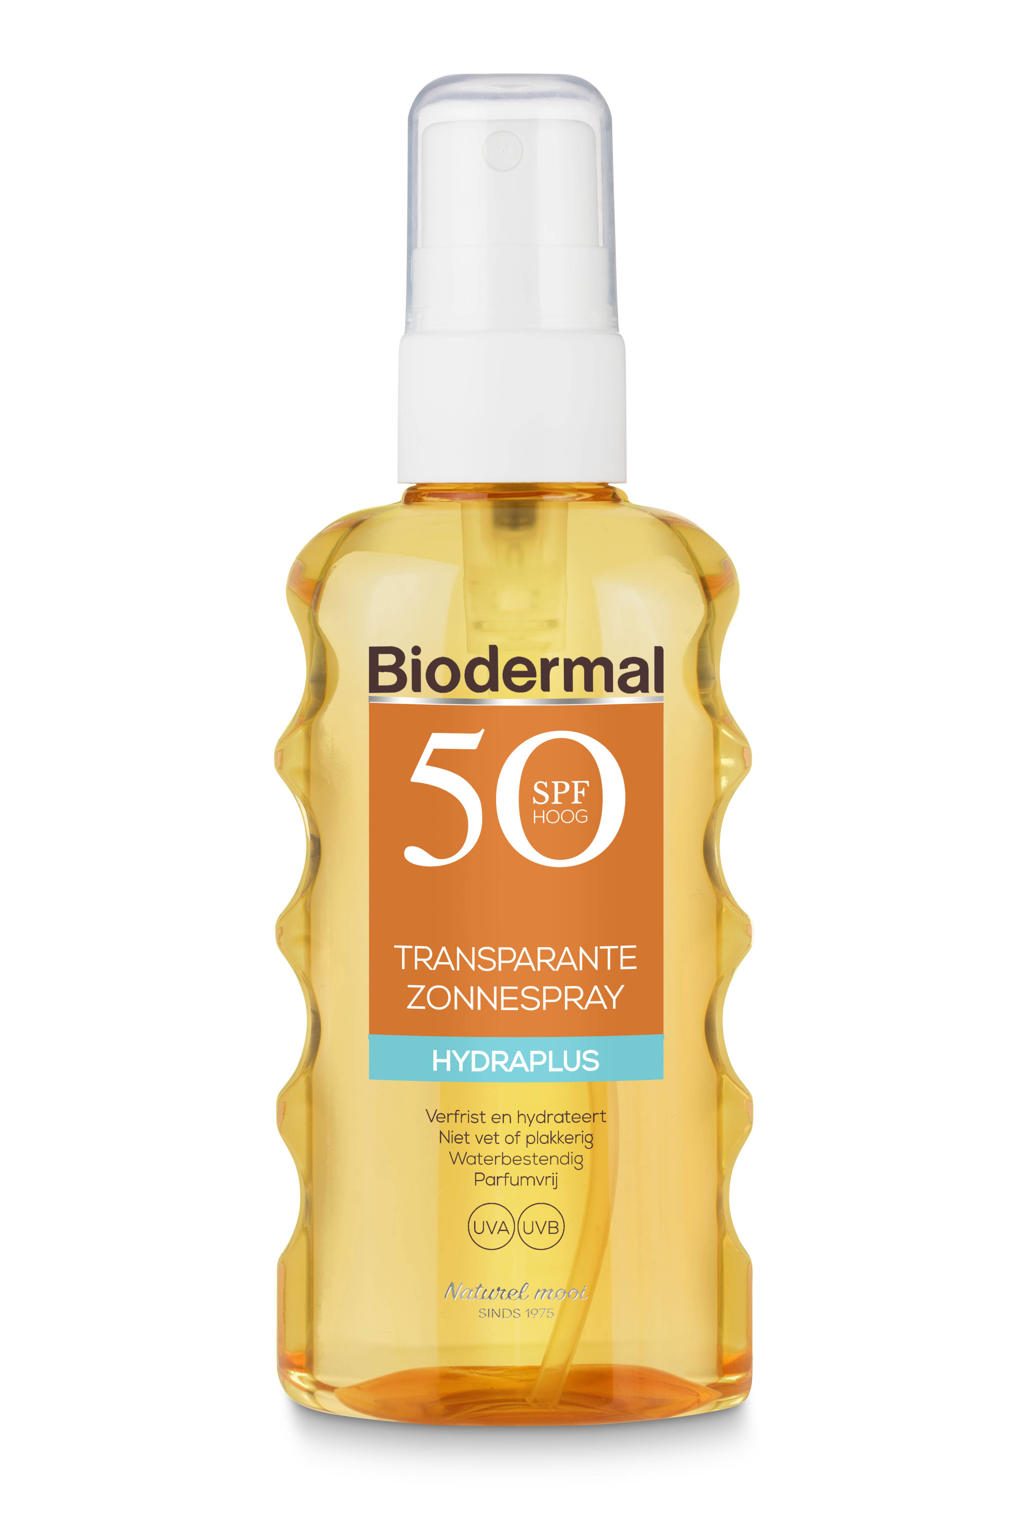 Biodermal Hydraplus transparante zonnebrand zonnespray - SPF 50 - 175 ml